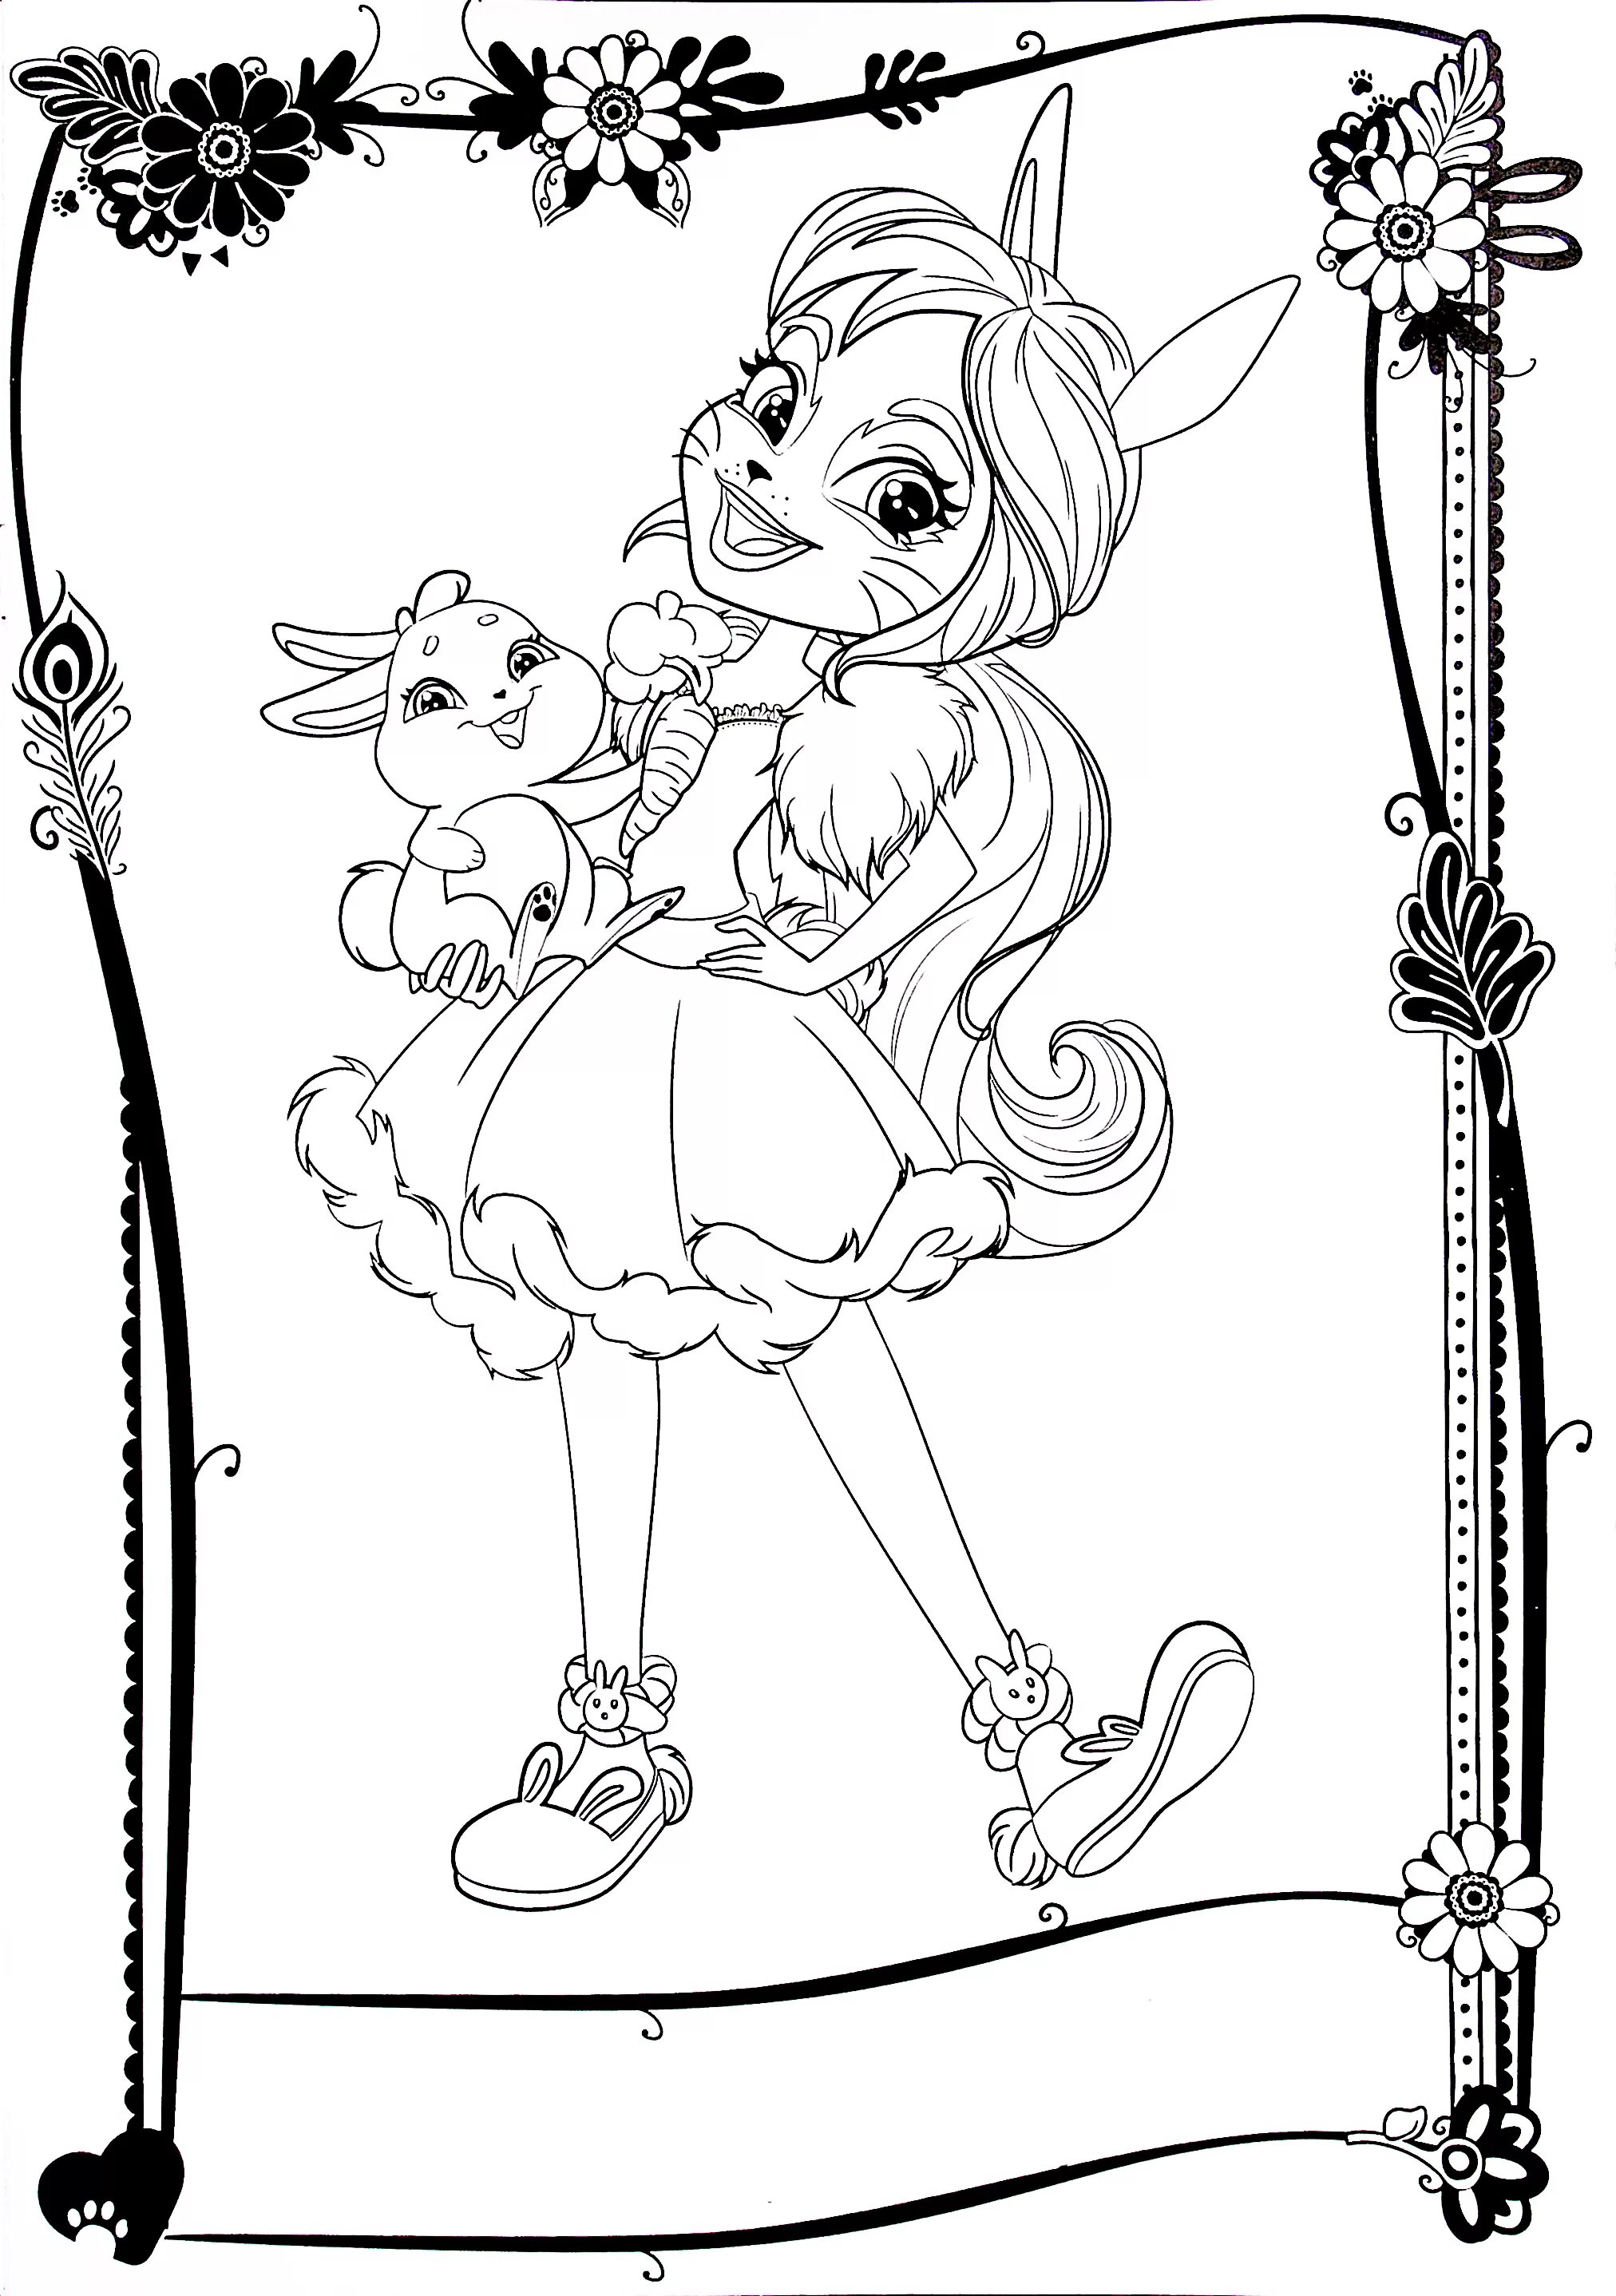 Enchantimals bunny #1